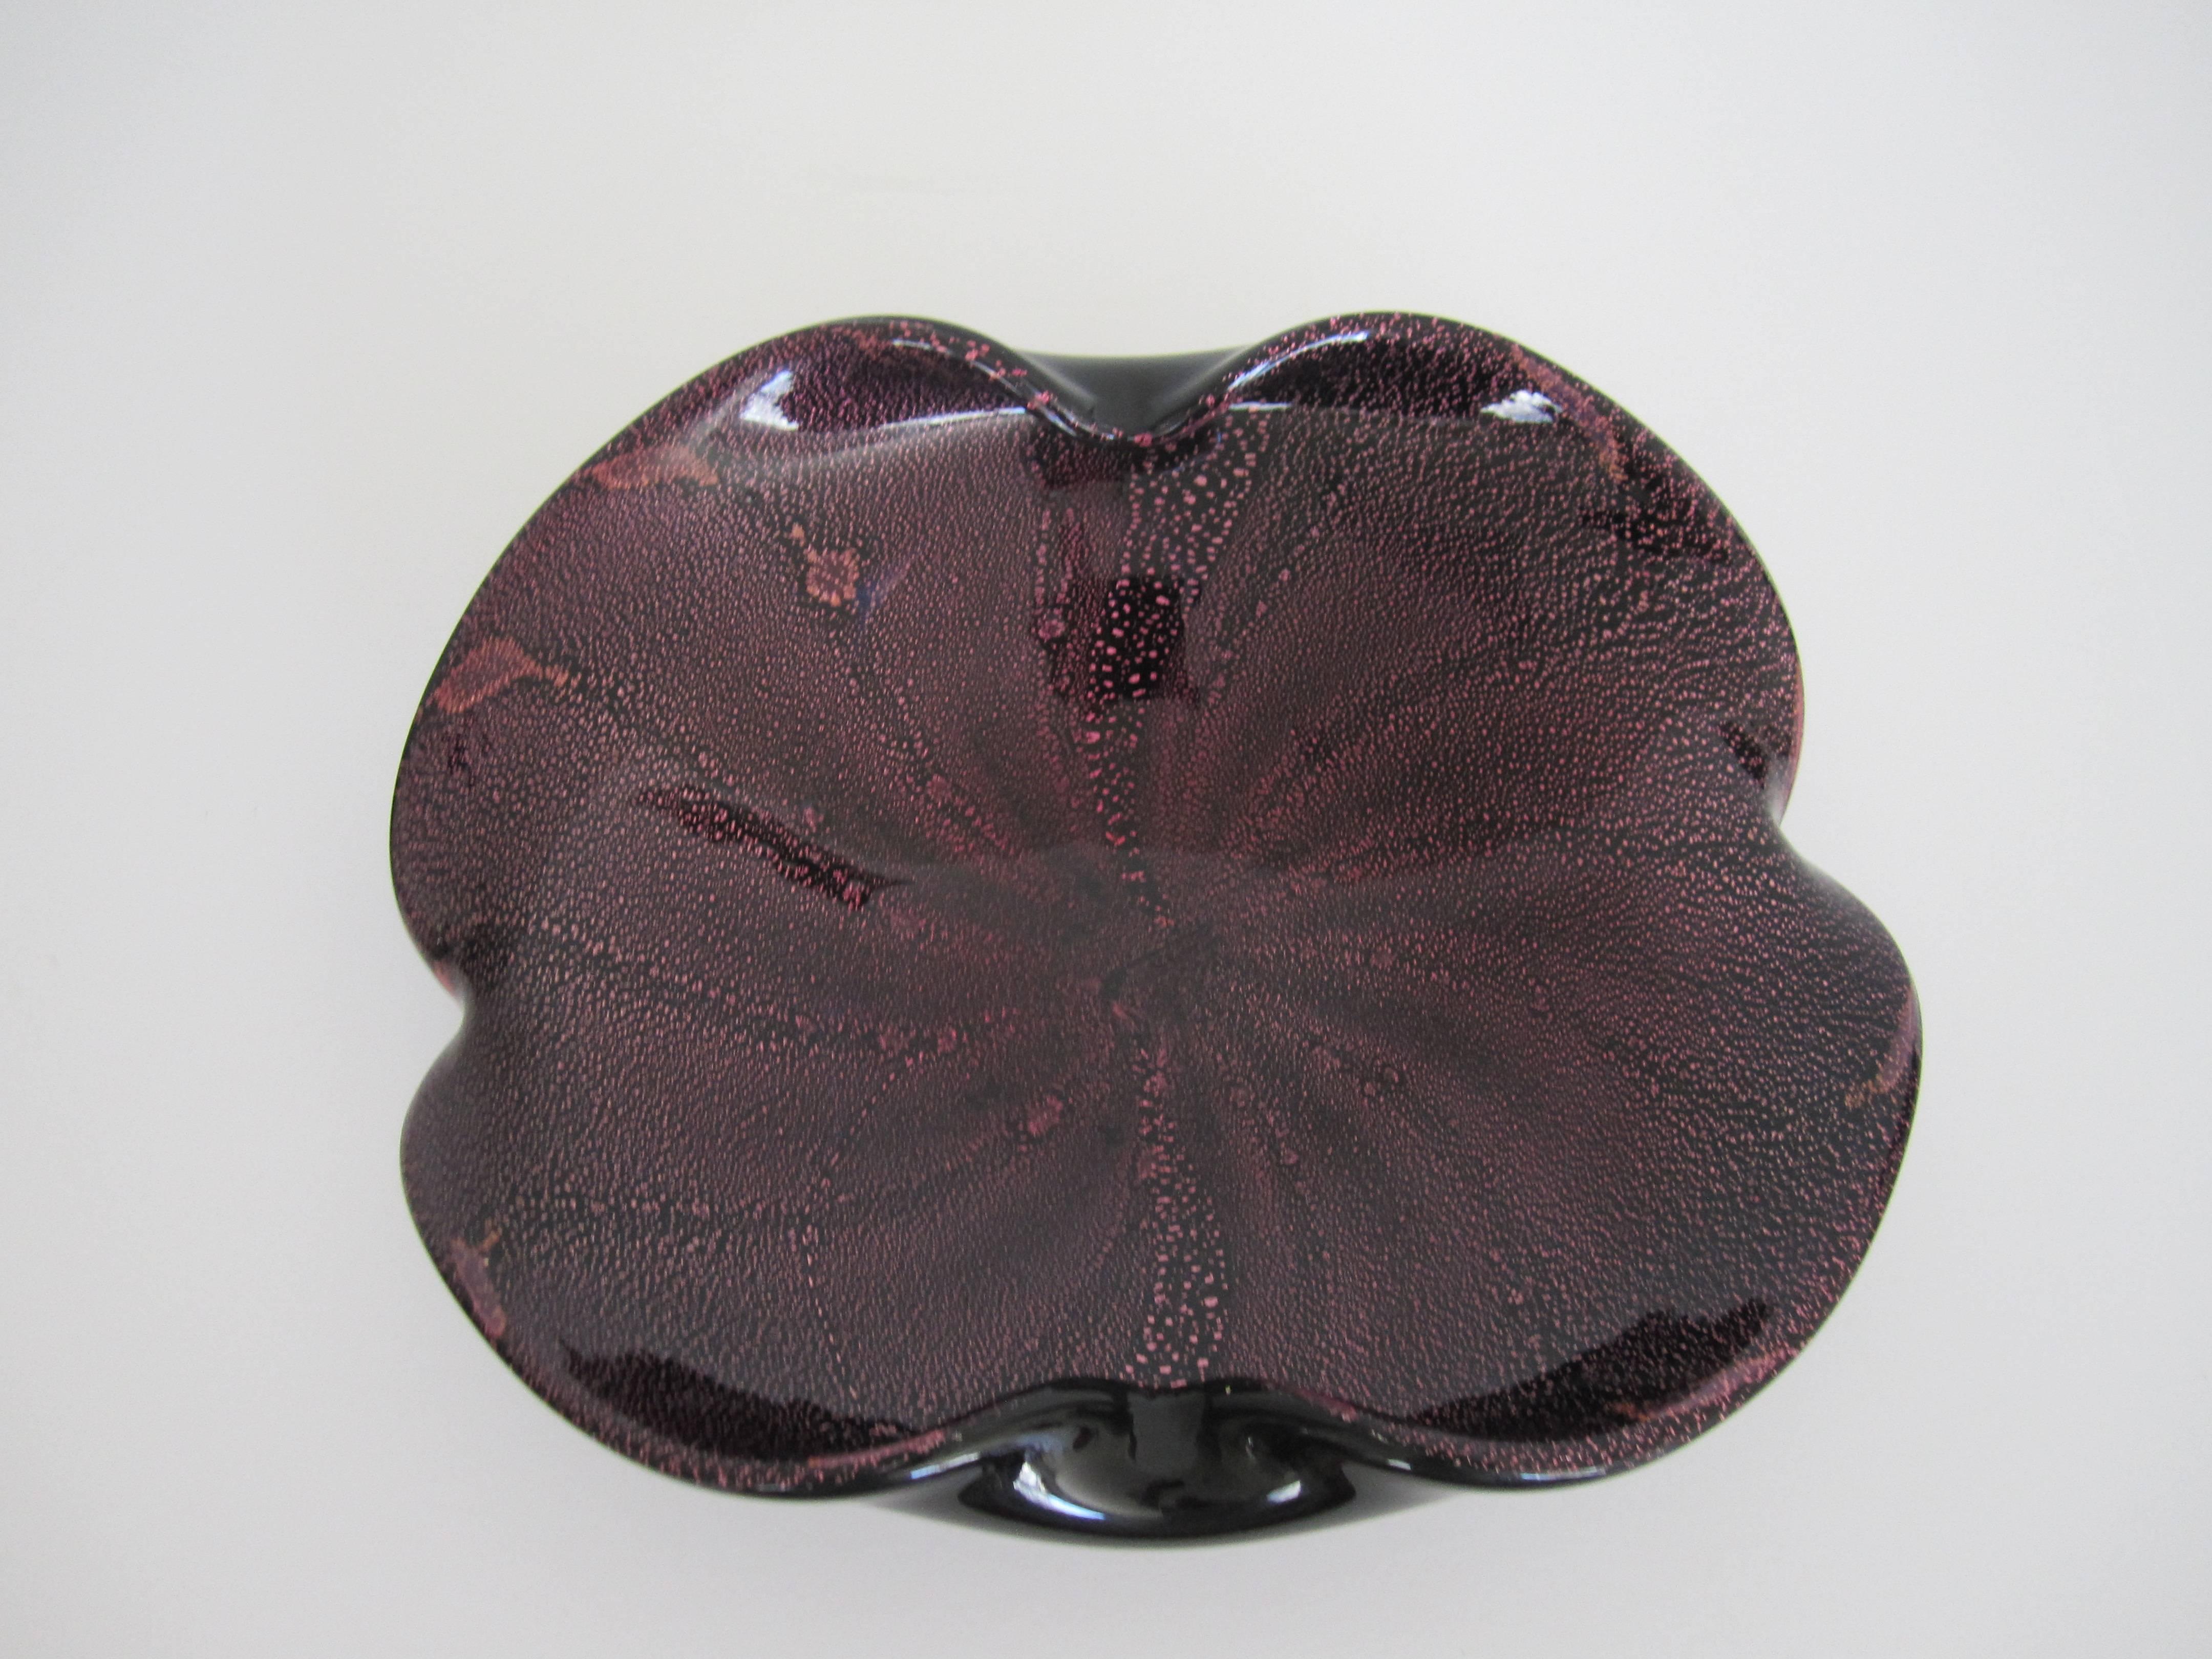 A very beautiful Italian purple and black Murano art glass bowl. Bowl is swirled with purple and very slight hints of orange flecks, circa mid-20th century 1960s, Italy. 

Bowl measures: 6